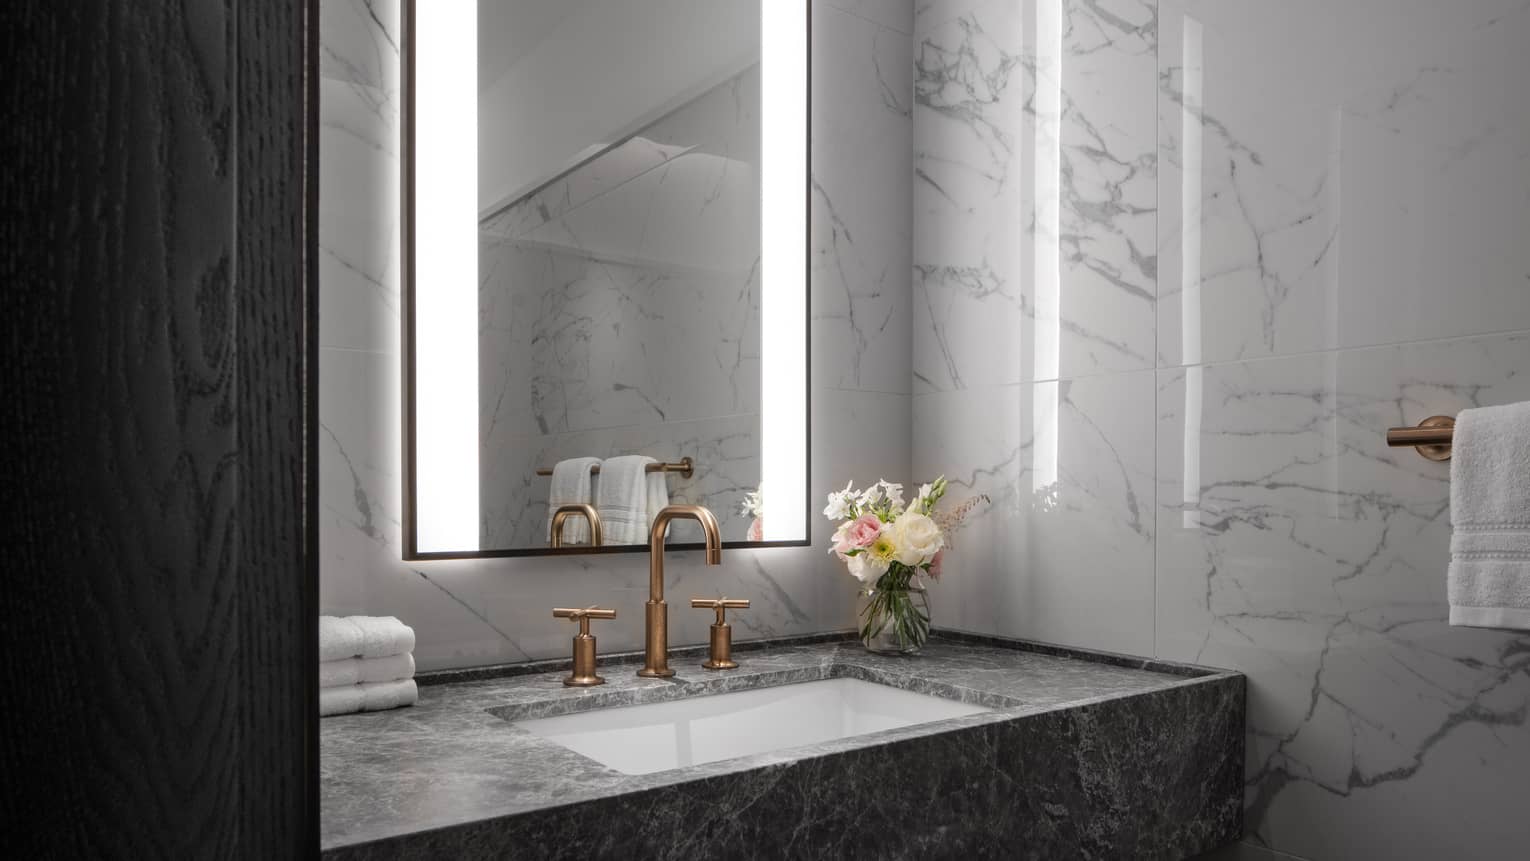 Marble bathroom vanity with illuminated mirror